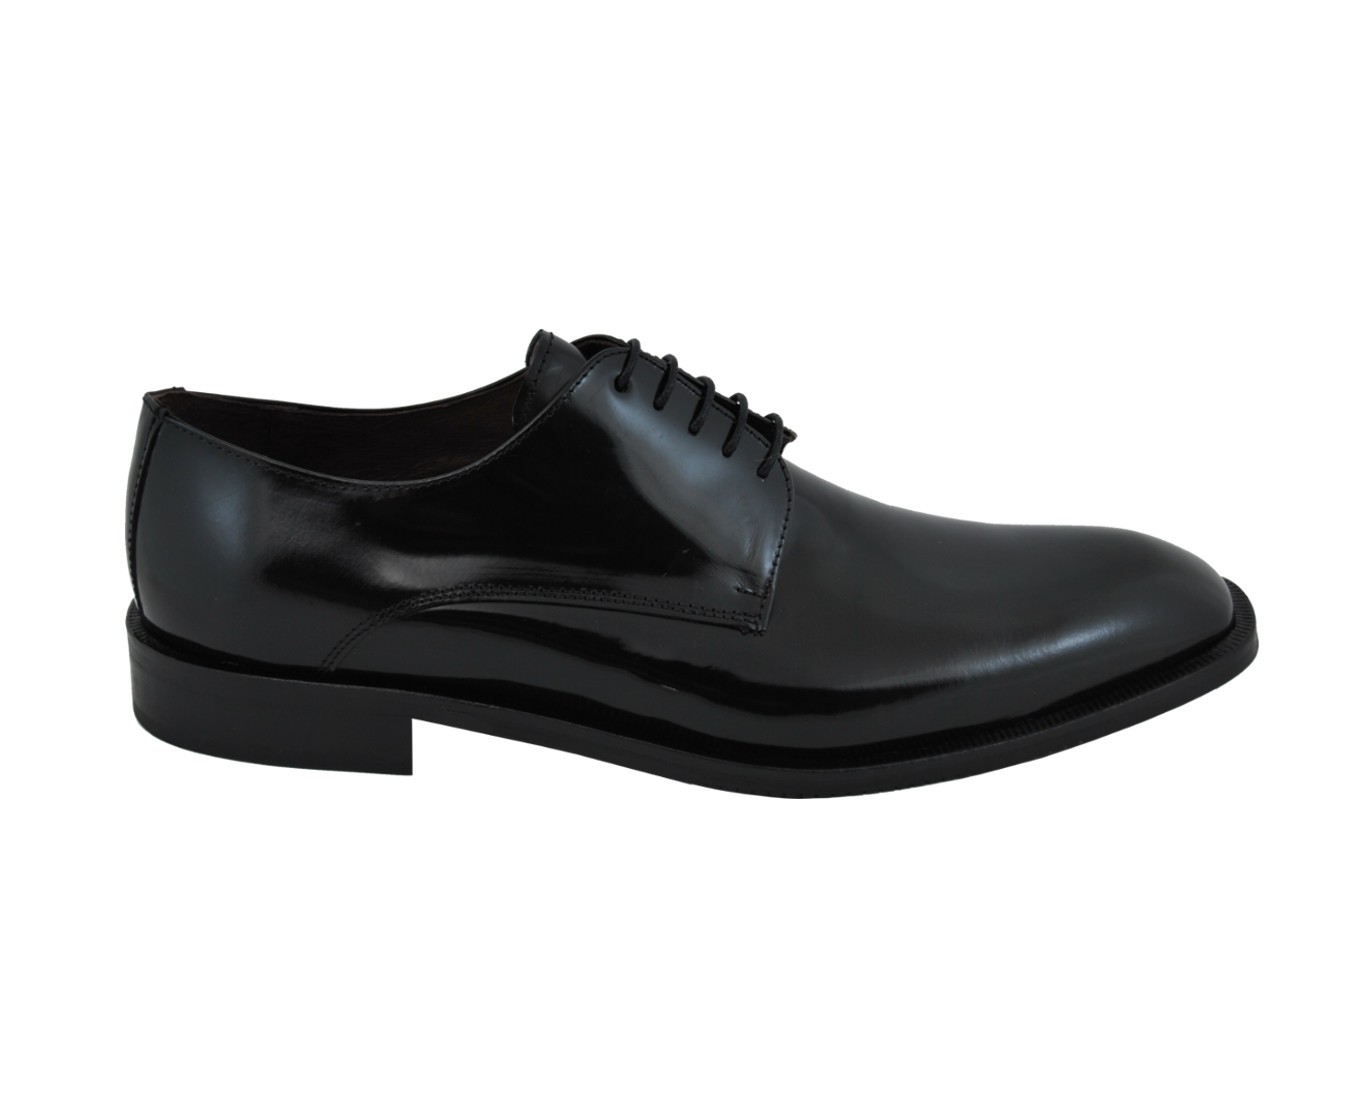 Zapato florentic negro para hombre